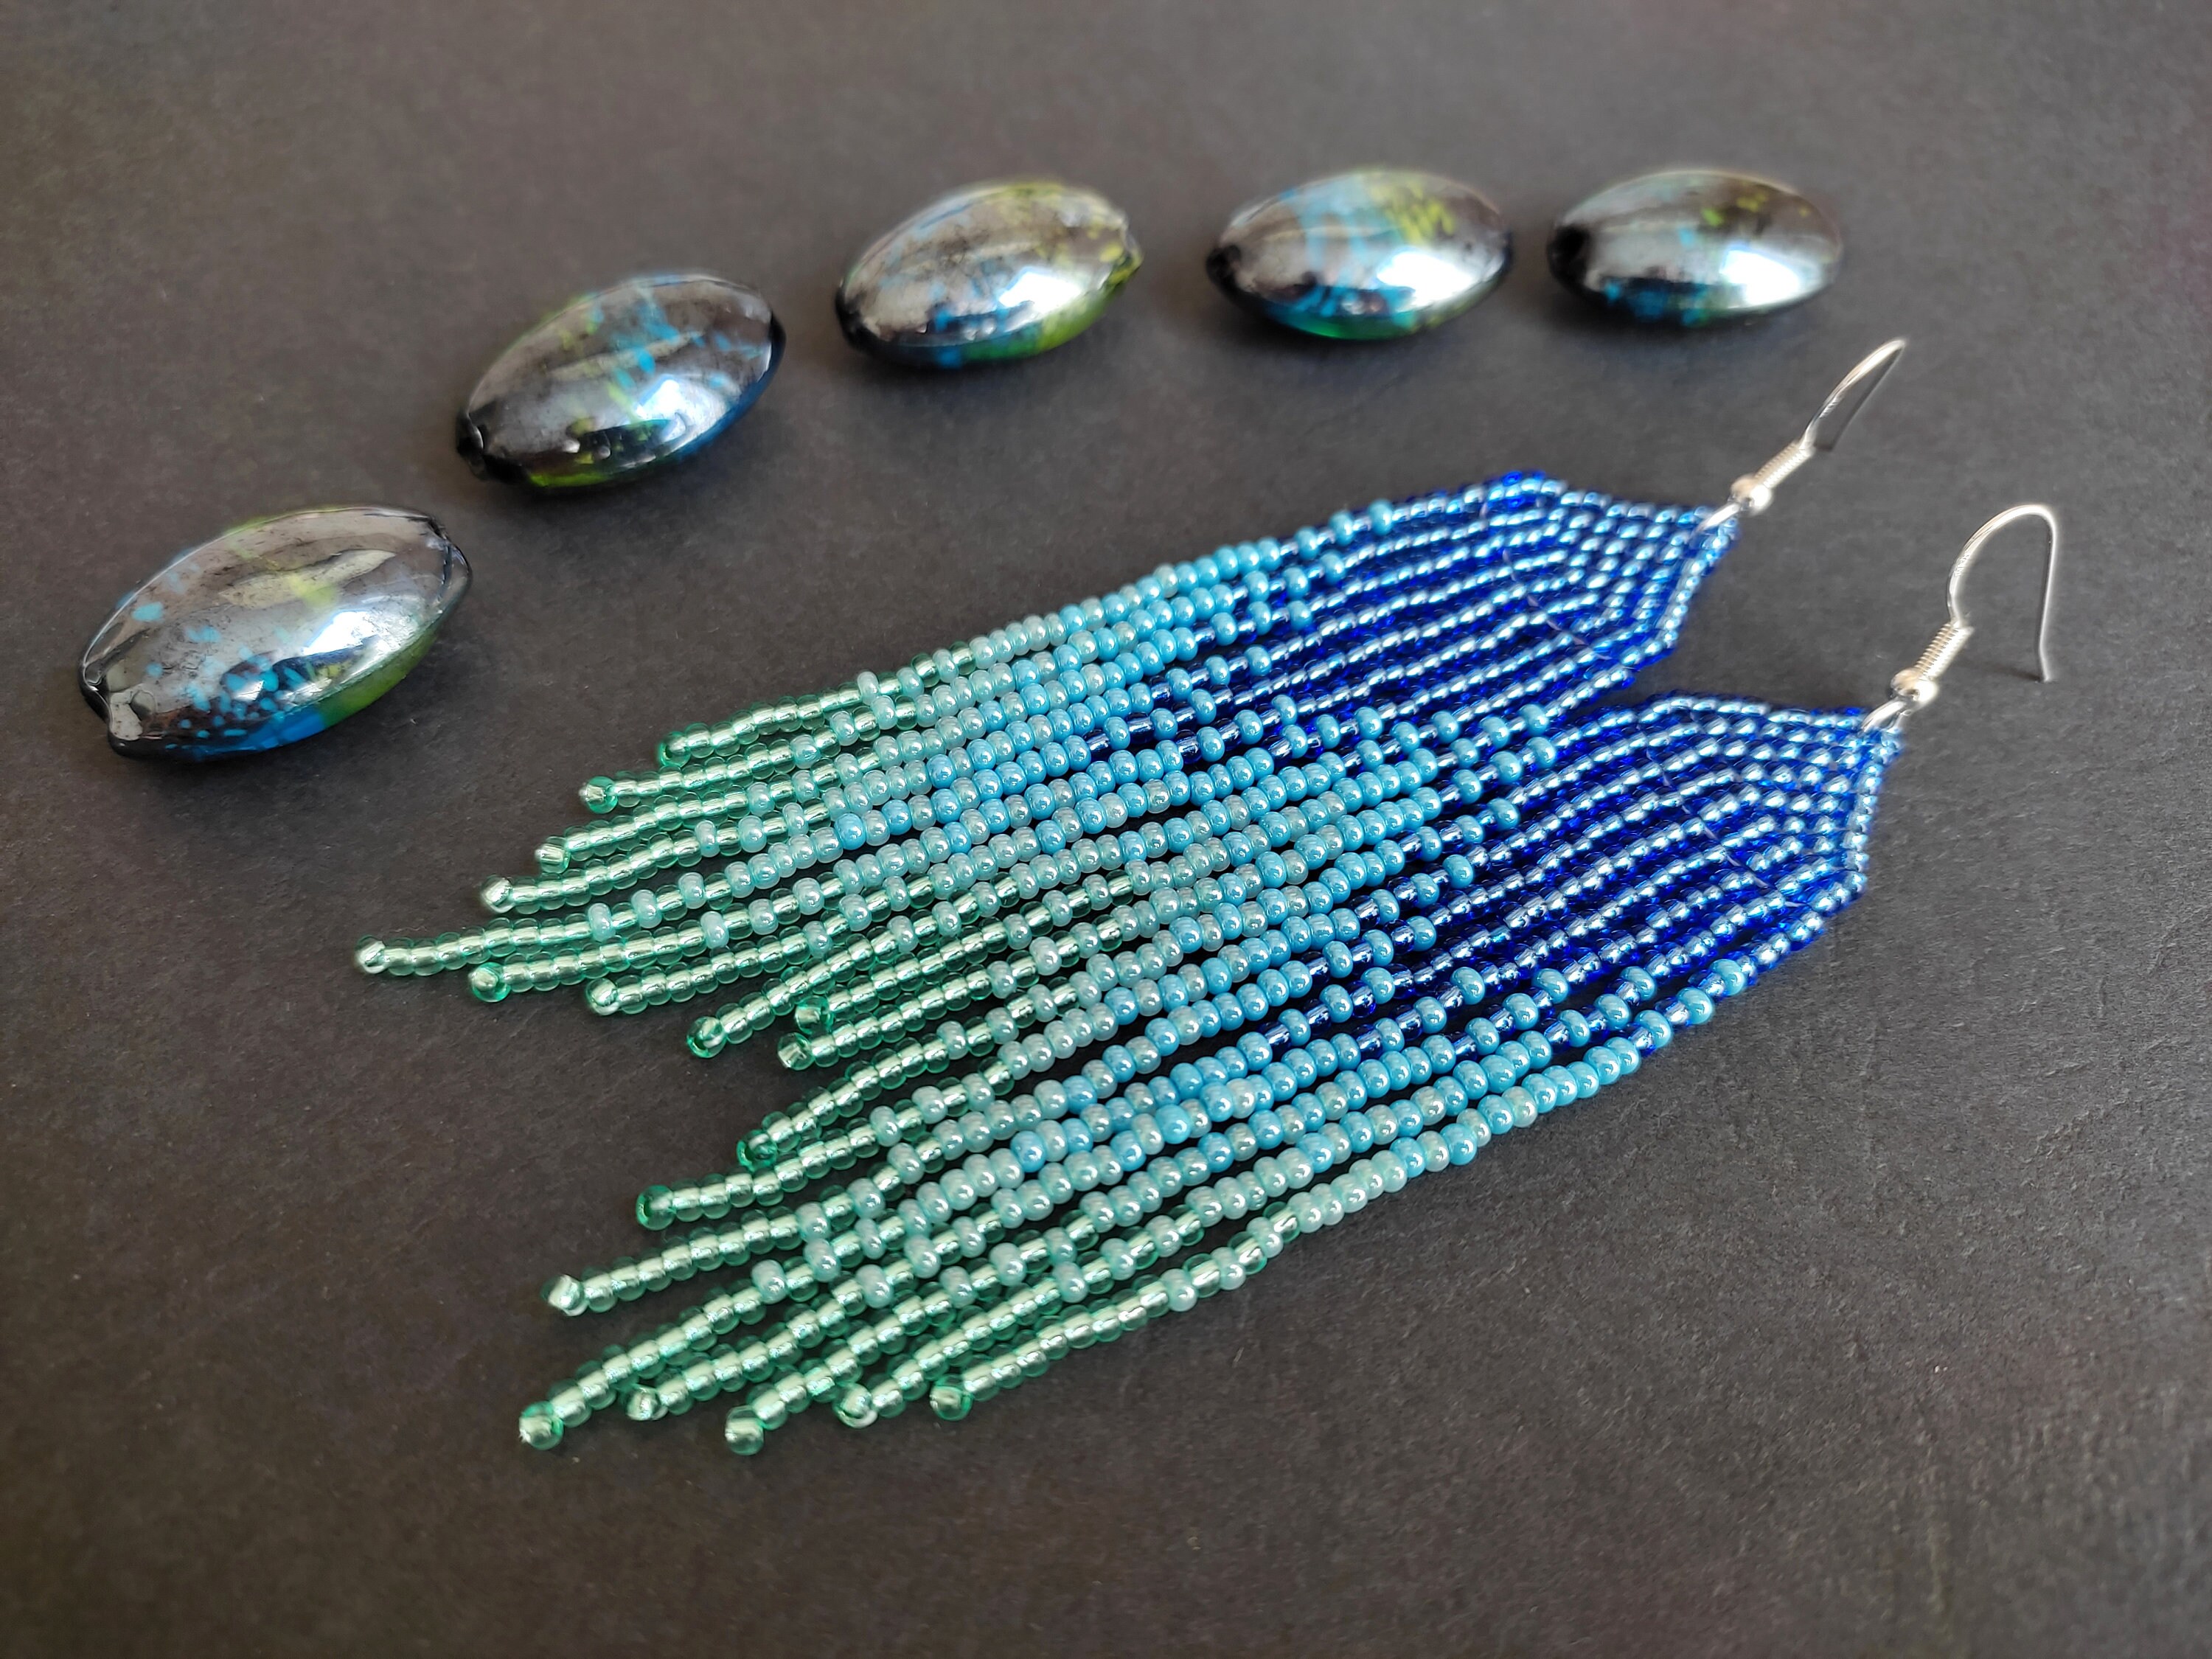 Fringed Harmony, Seed Bead Fringe Earrings -    earrings,  Turquoise seed bead, Beaded fringe